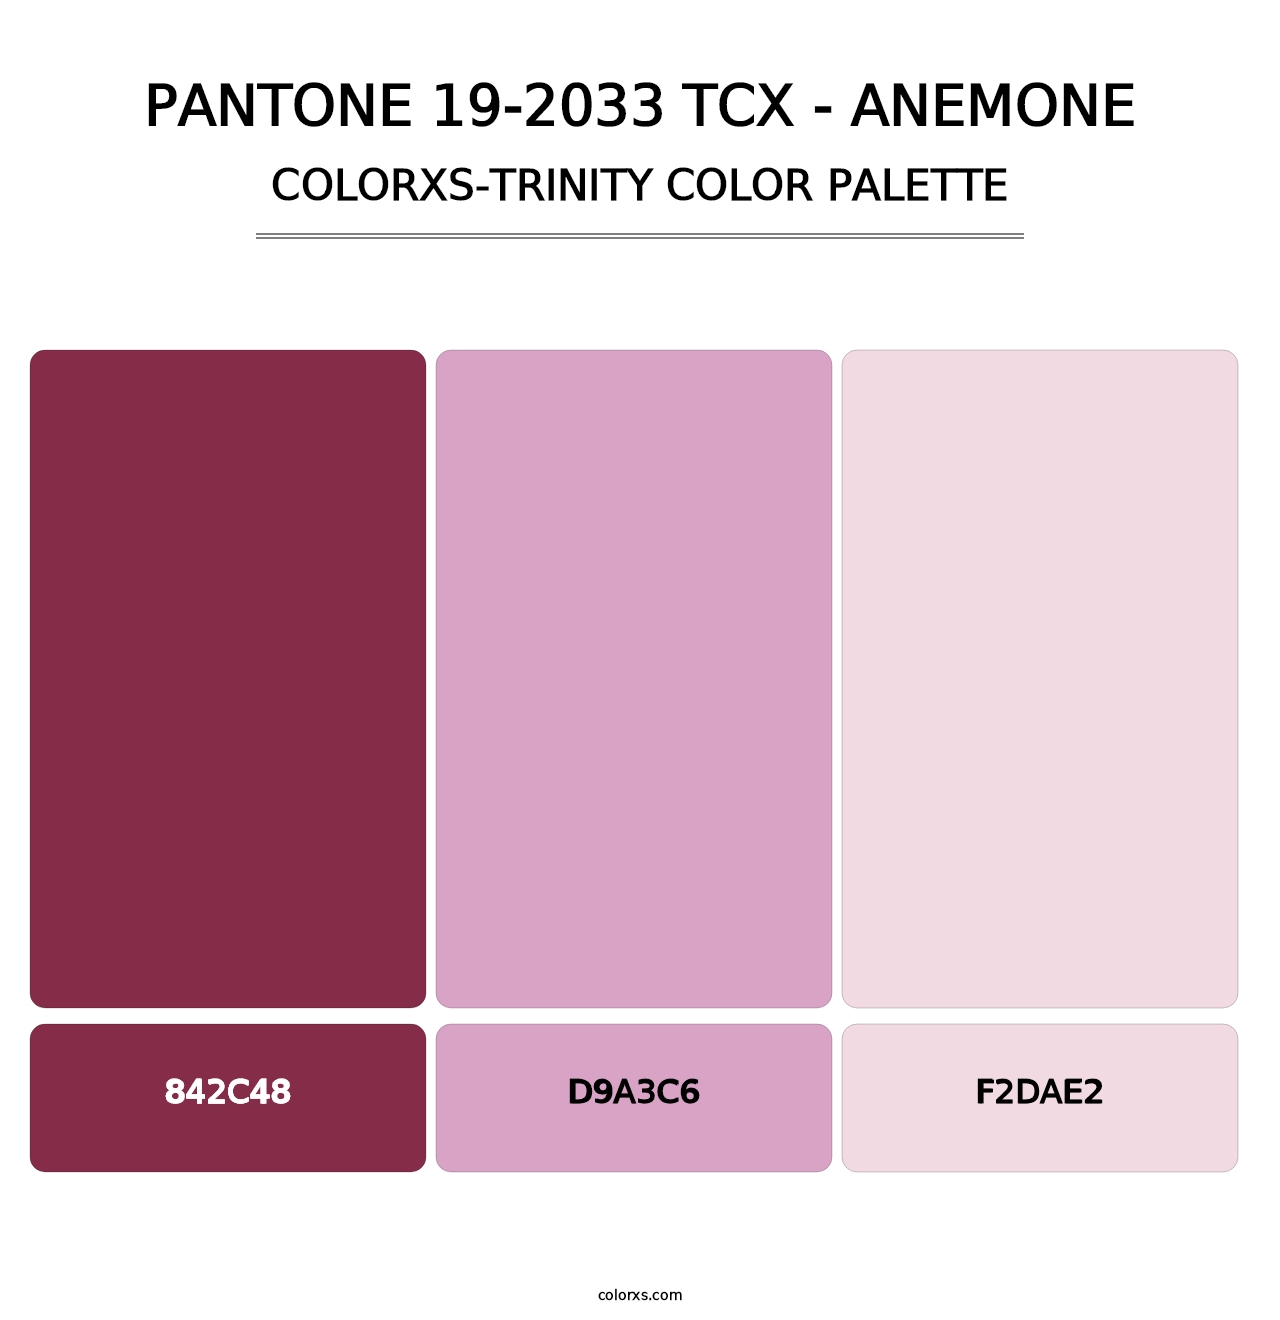 PANTONE 19-2033 TCX - Anemone - Colorxs Trinity Palette